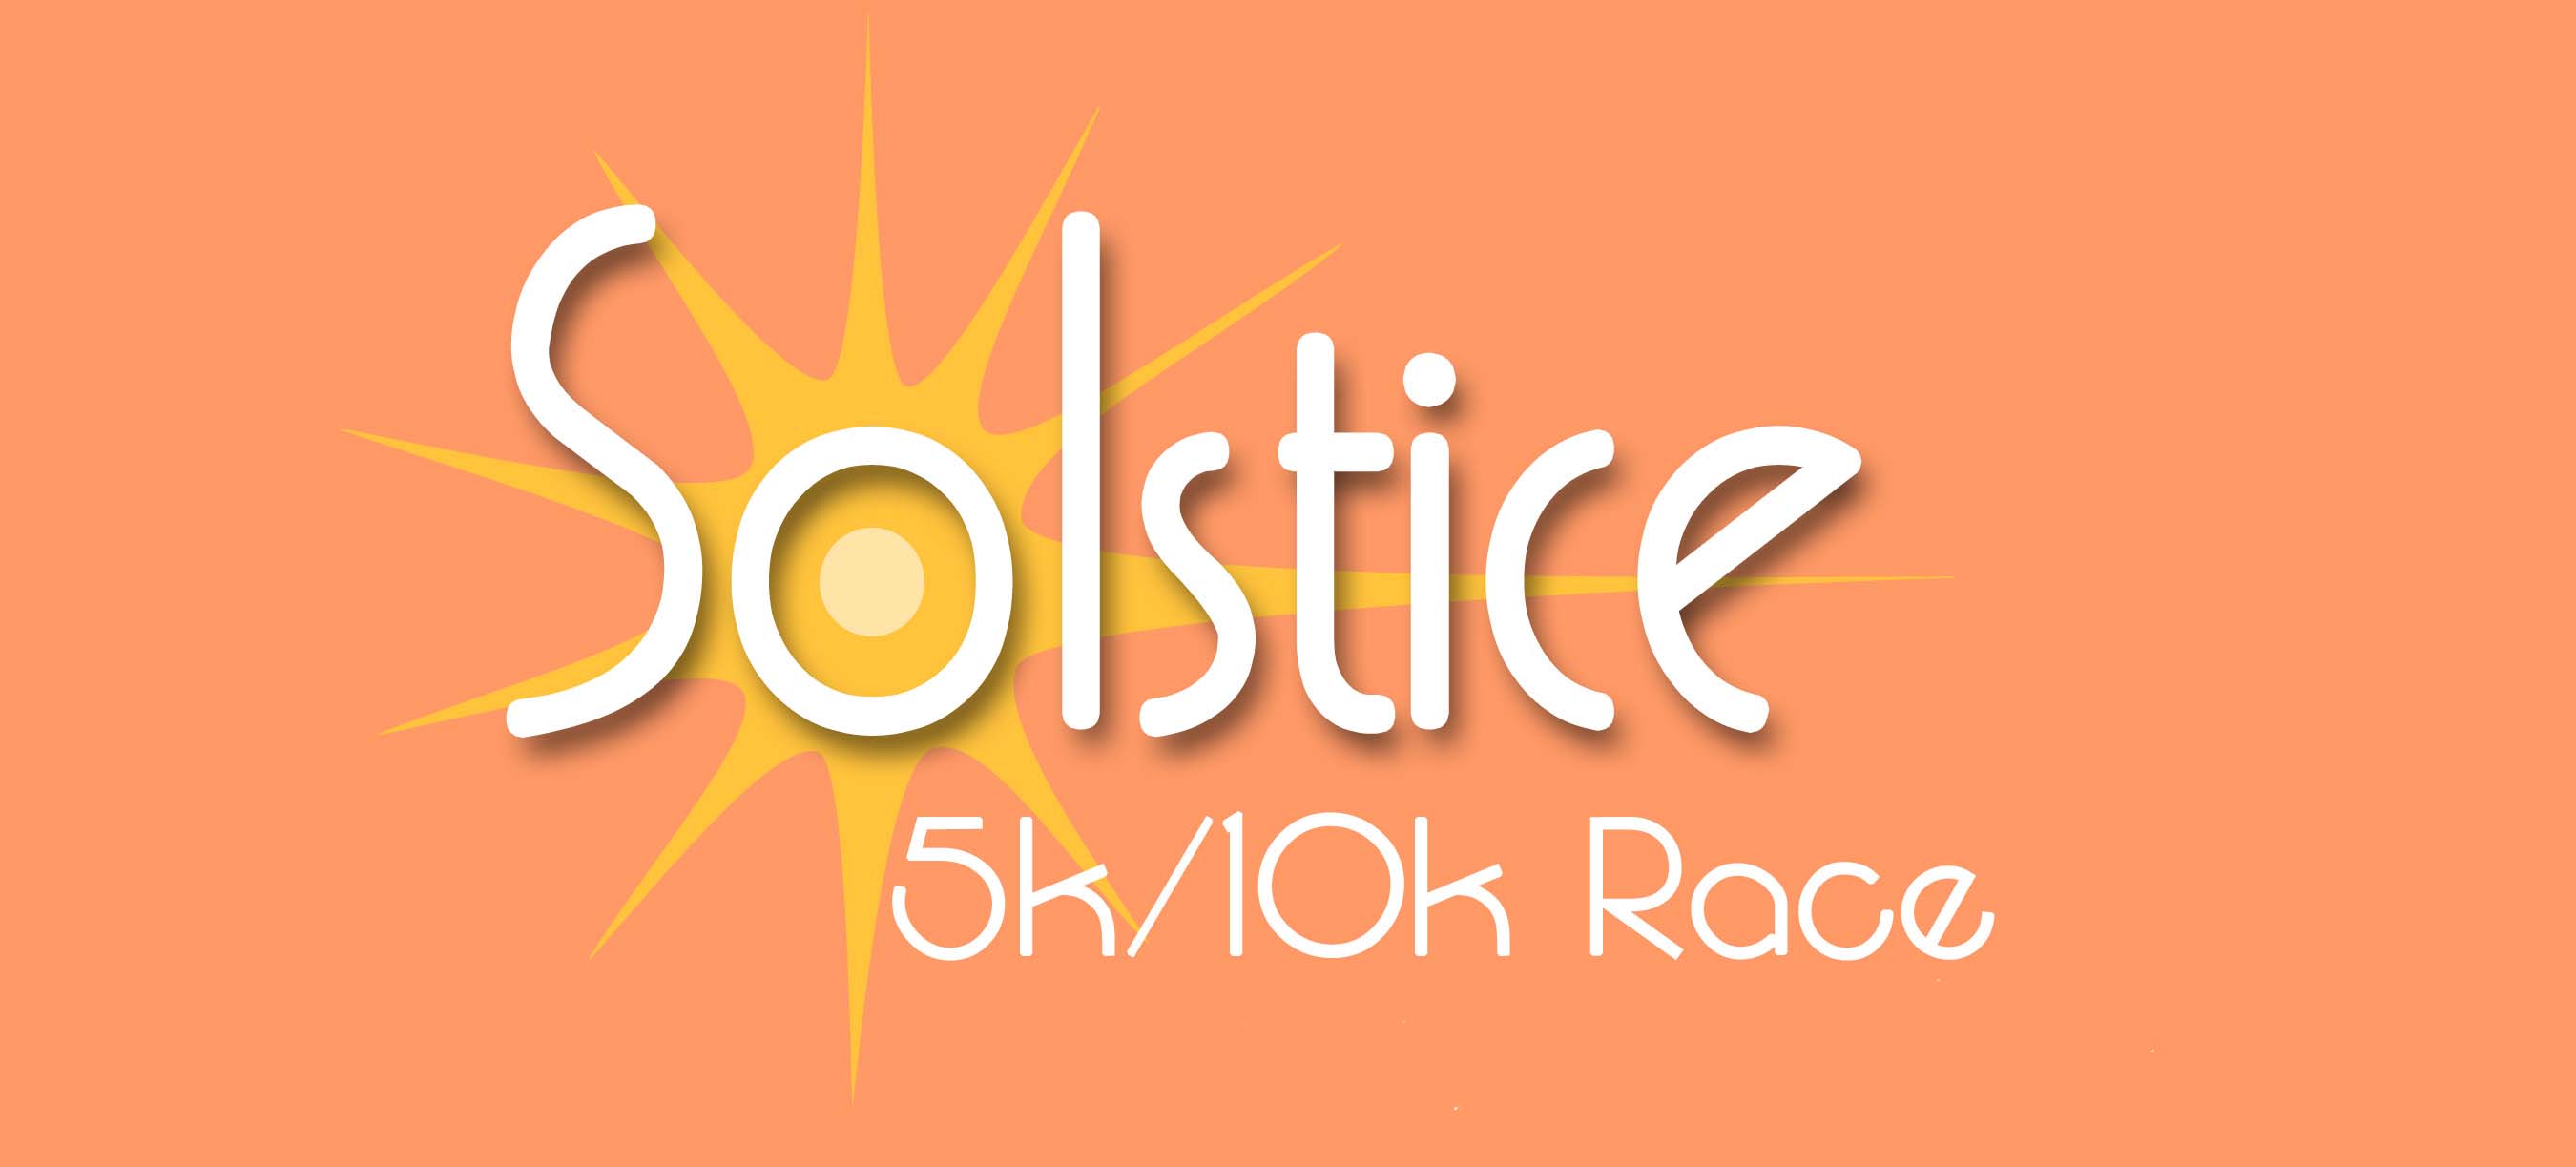 Register for 2019 Solstice Festival 1 Mile